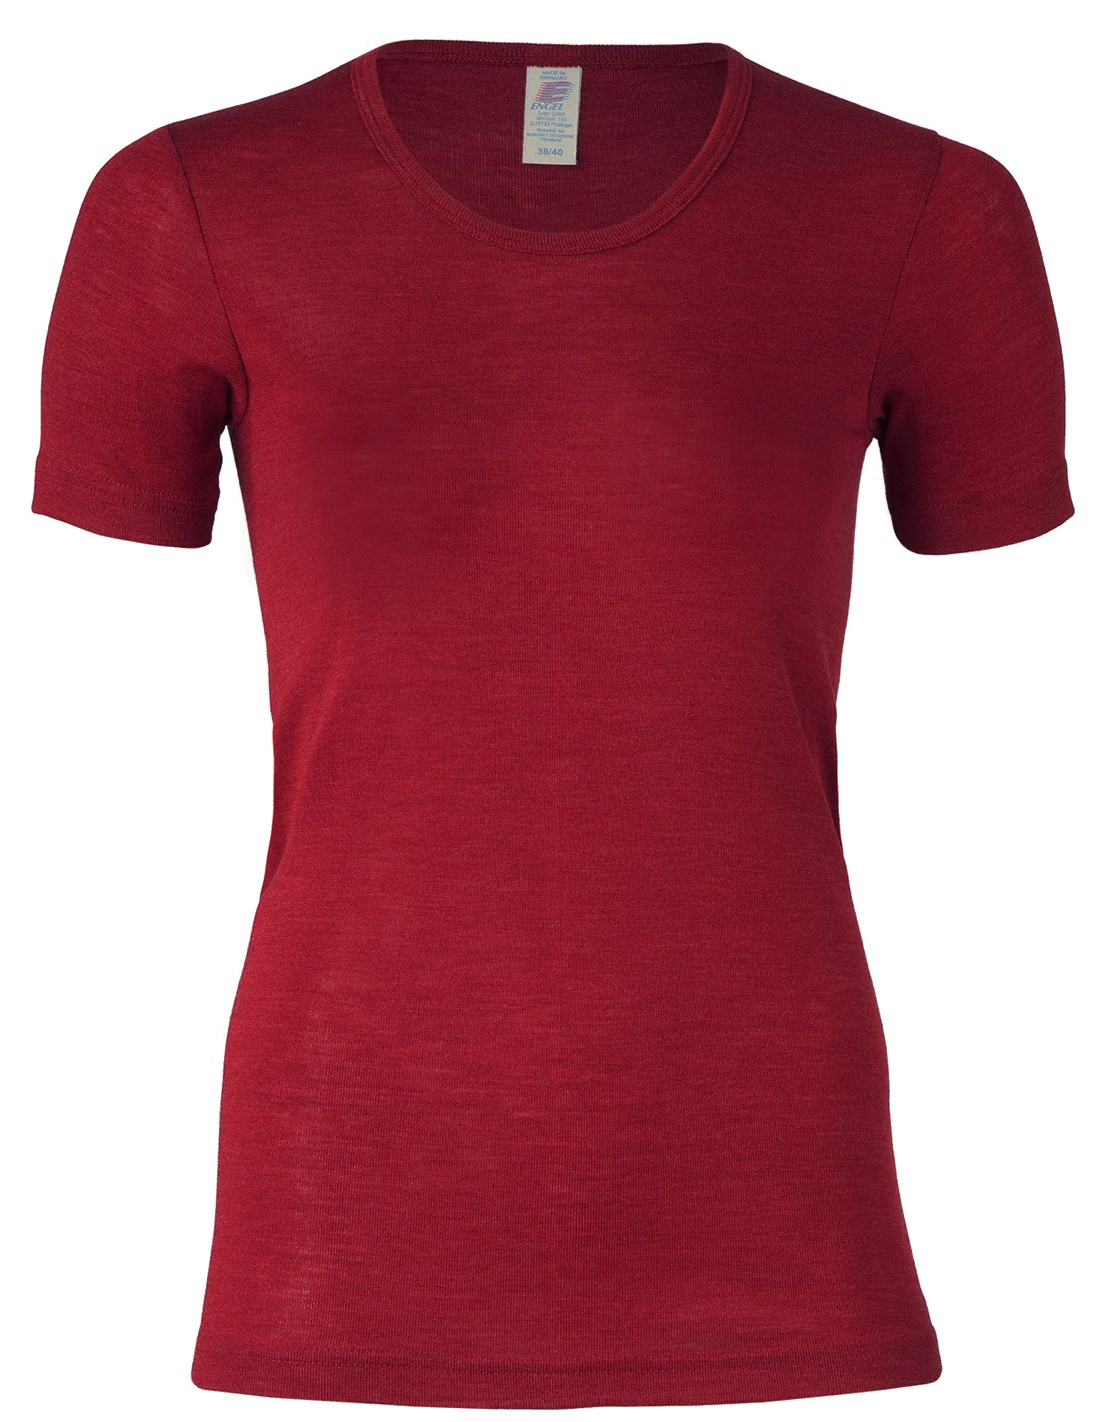 Image of Dames T-Shirt Zijde Wol Engel Natur, Kleur Bordeauxrood, Maat 42/44 - Large